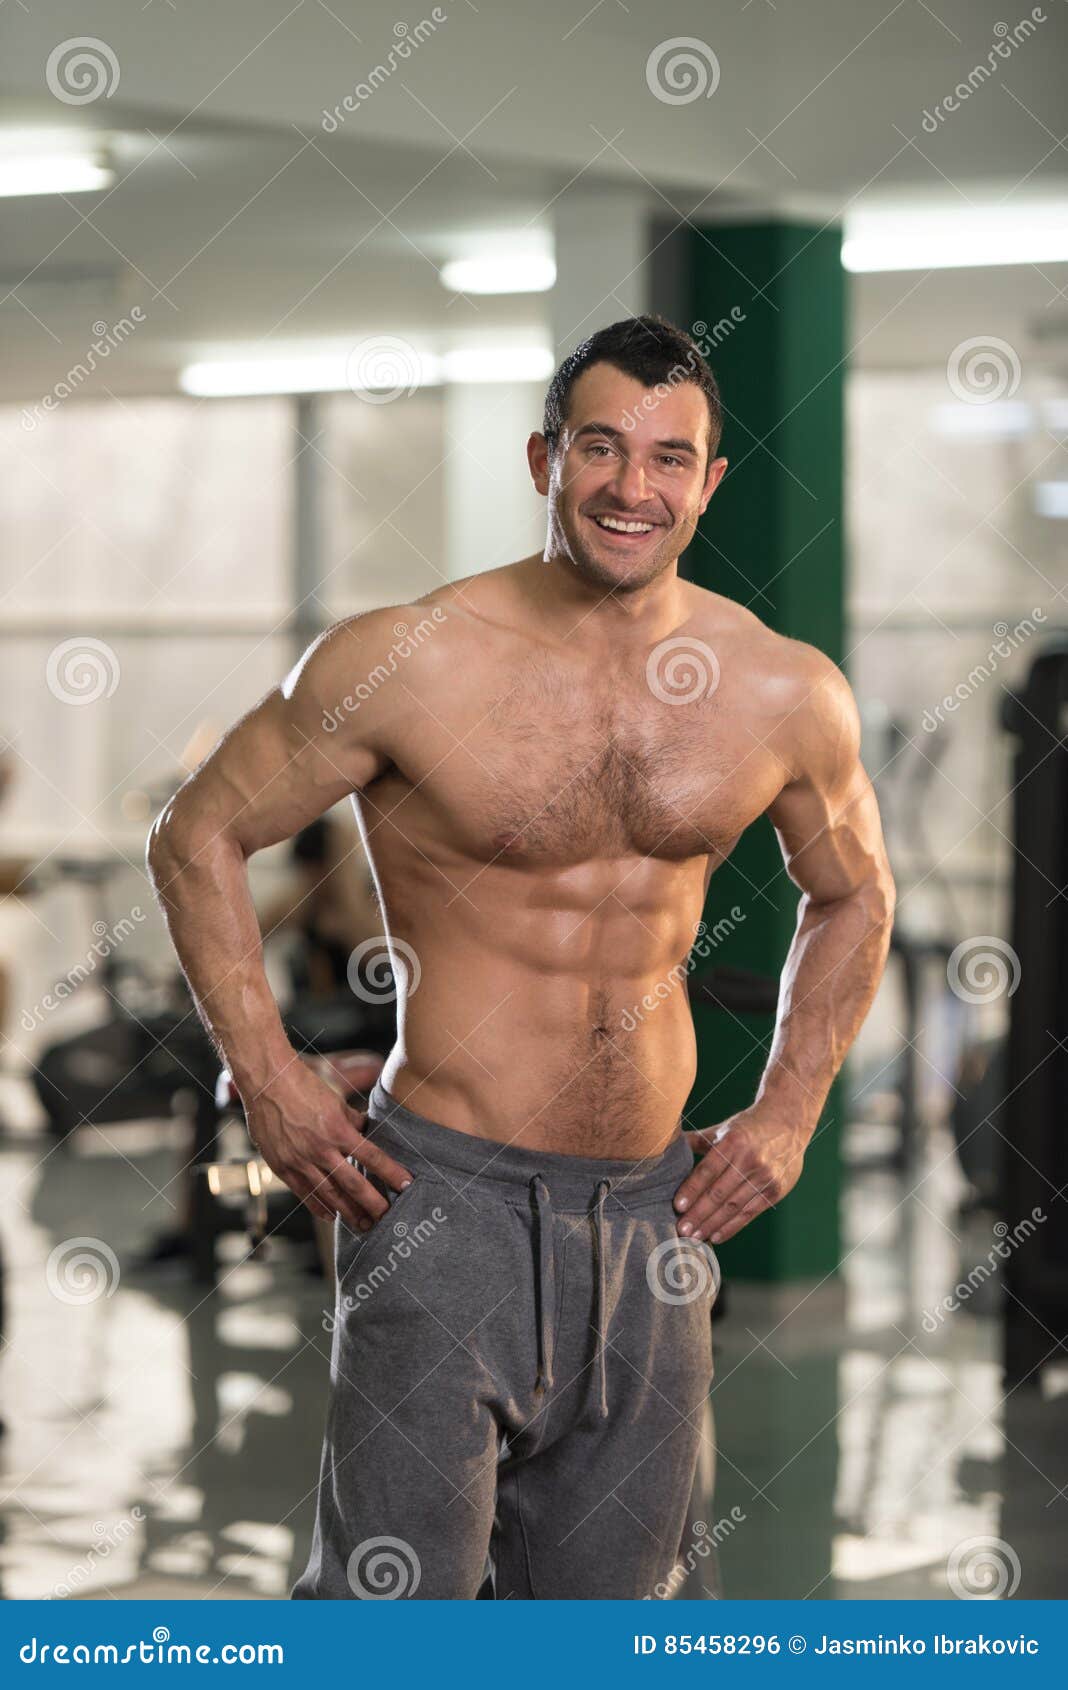 Men hairy muscle Enraged bodybuilder